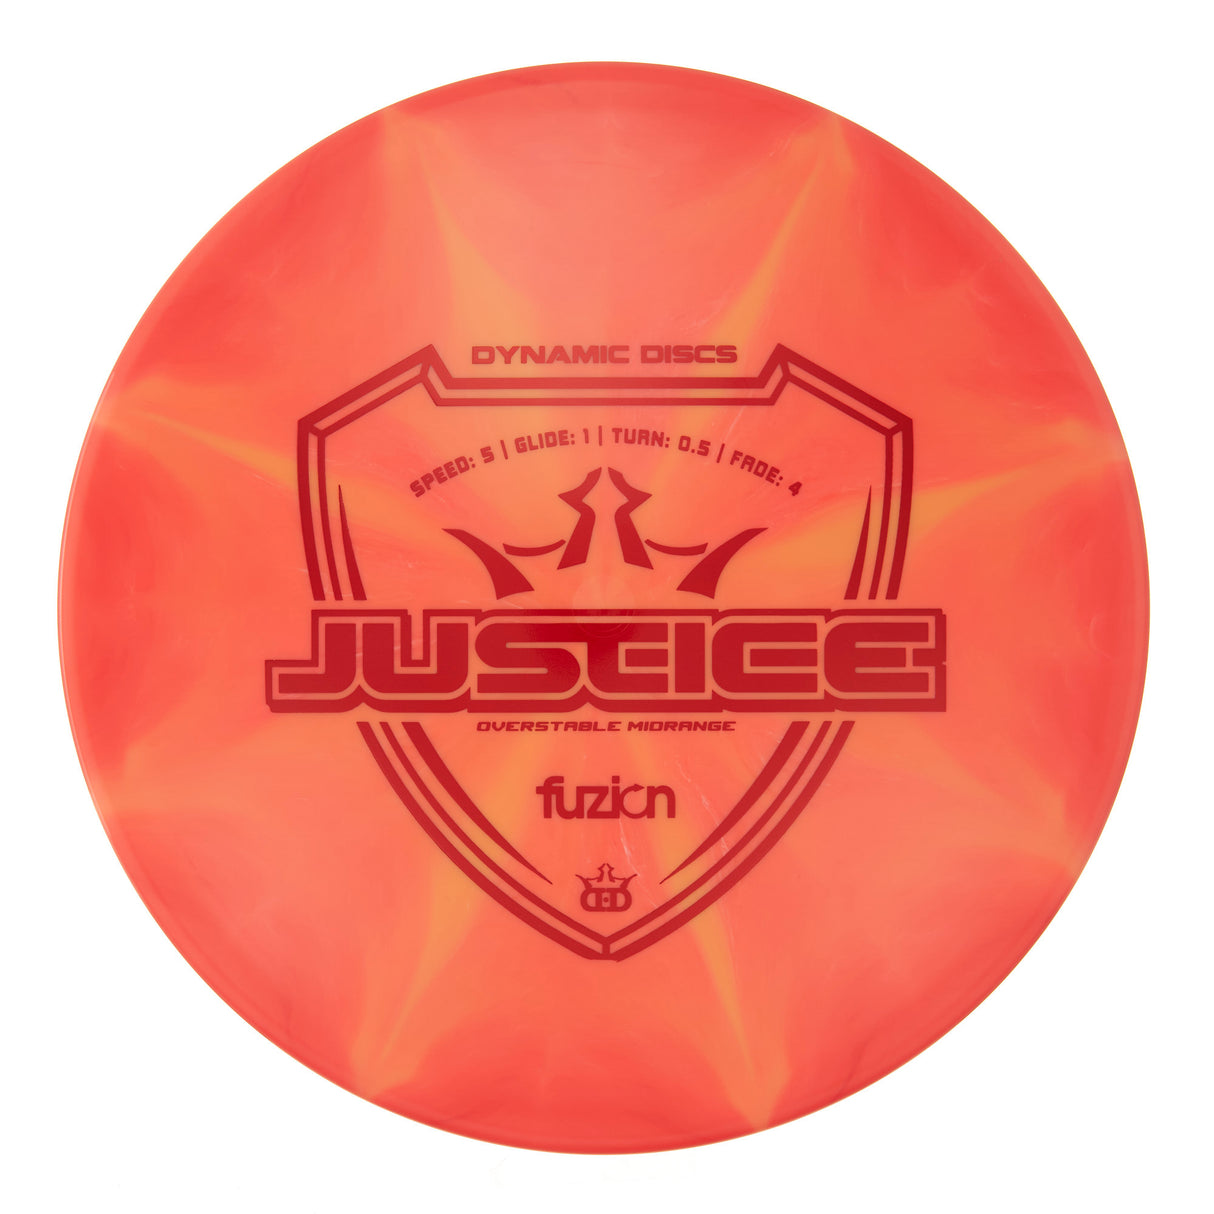 Dynamic Discs Justice - Fuzion Burst 177g | Style 0001